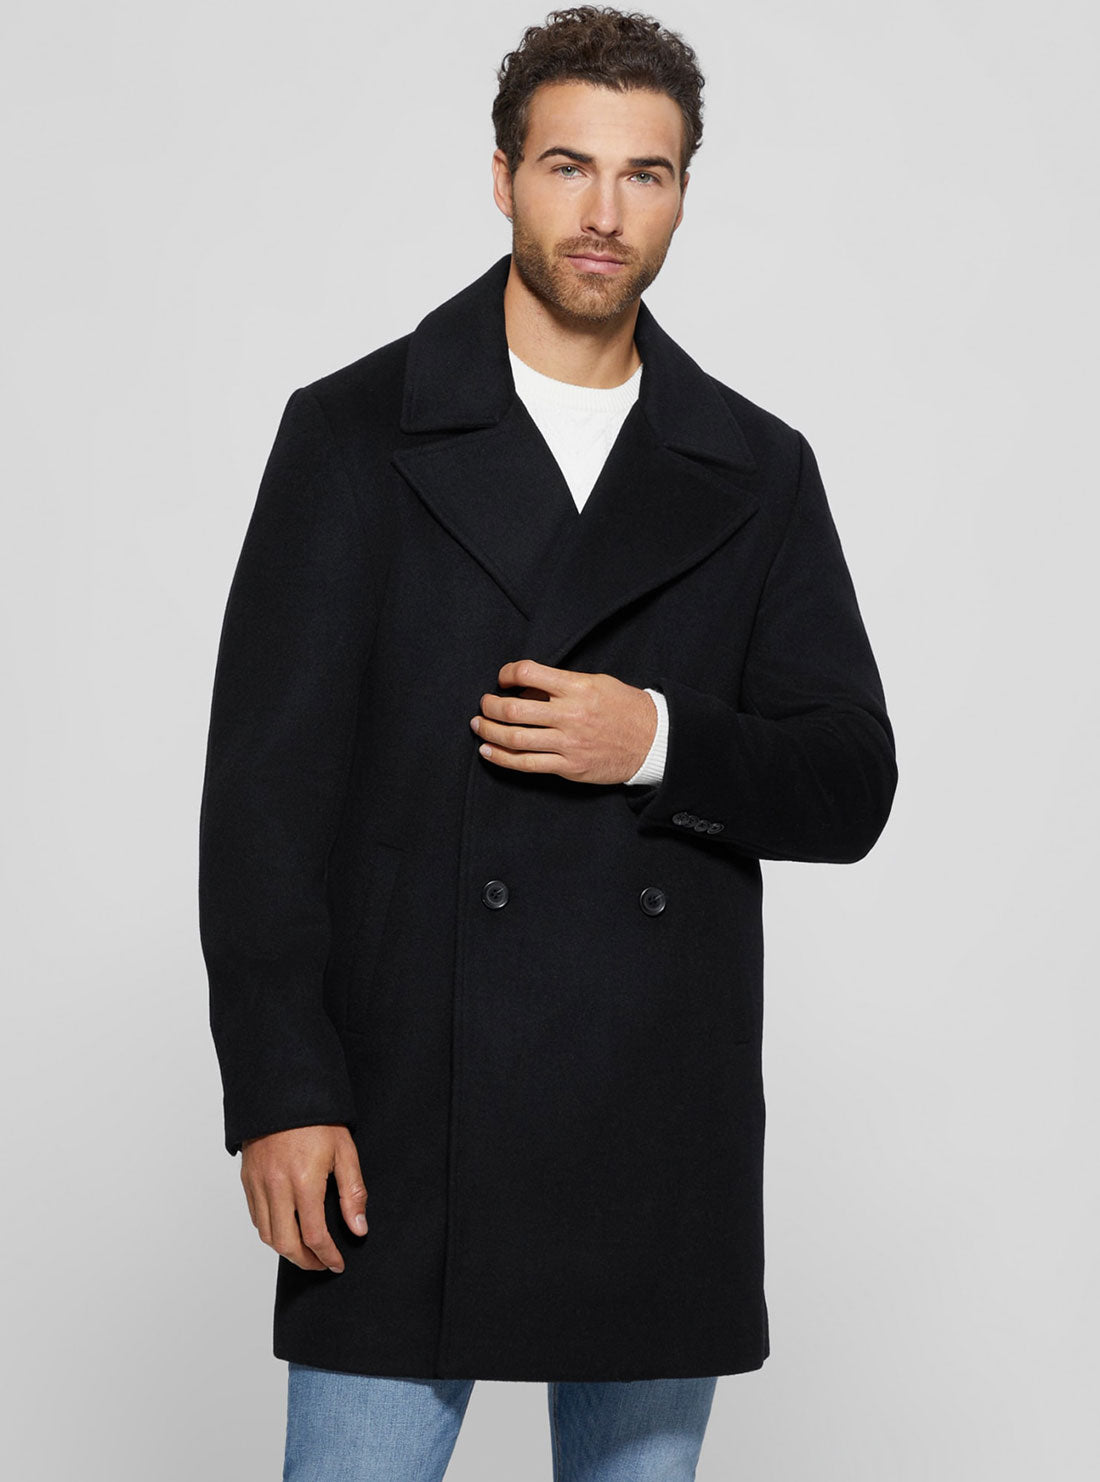 Black Bel Air Melton Wool Coat | GUESS Men's Apparel | front view